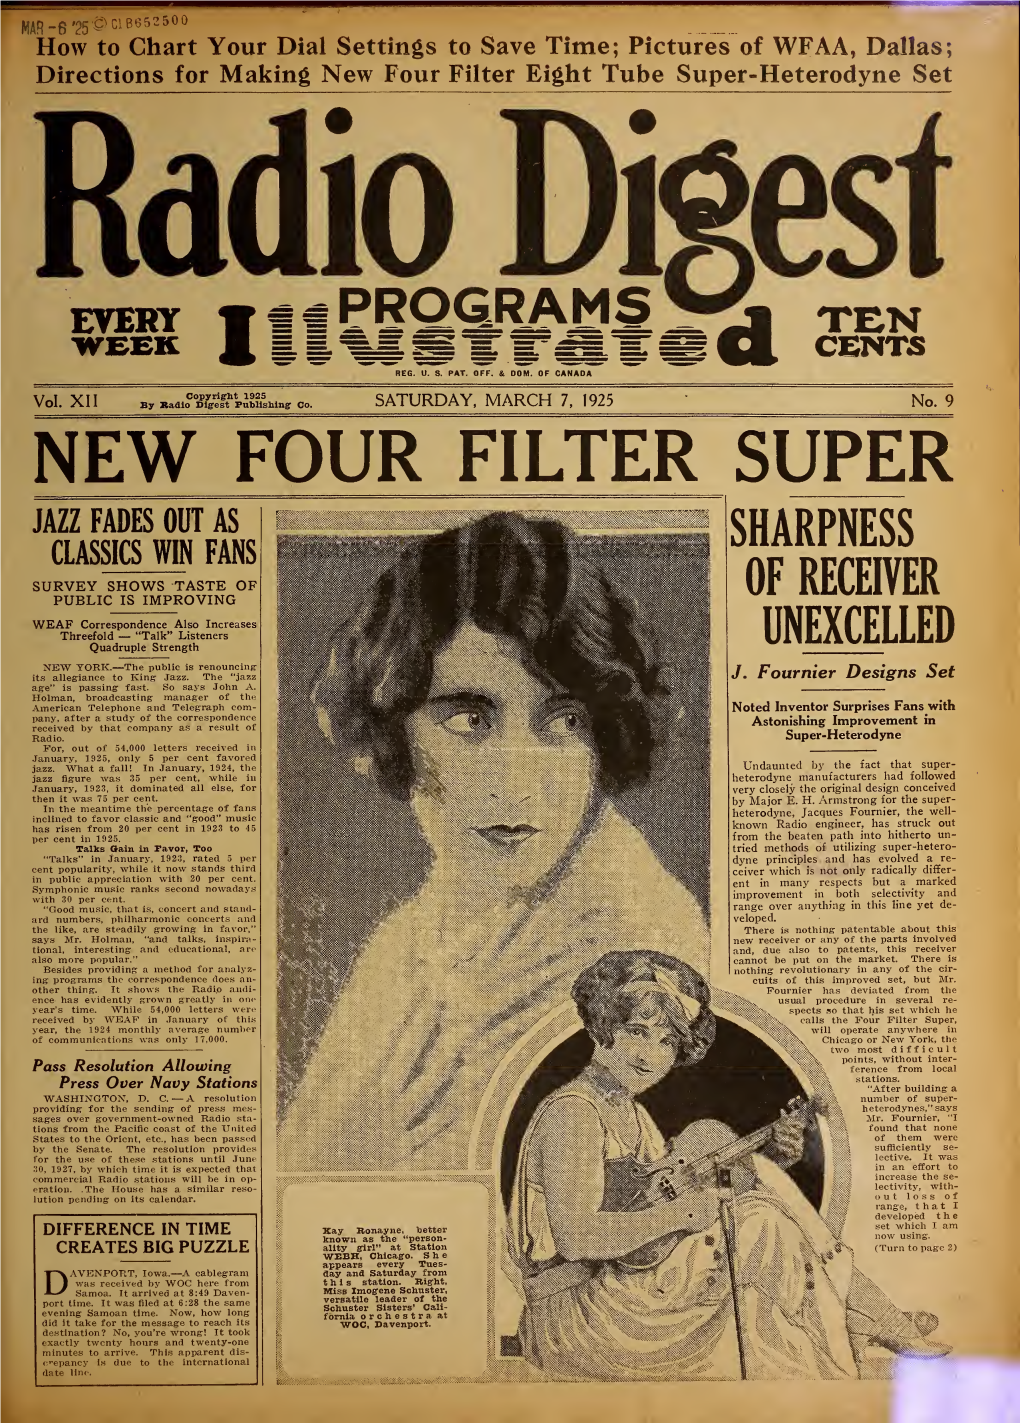 Radio Digest, 1924-1925